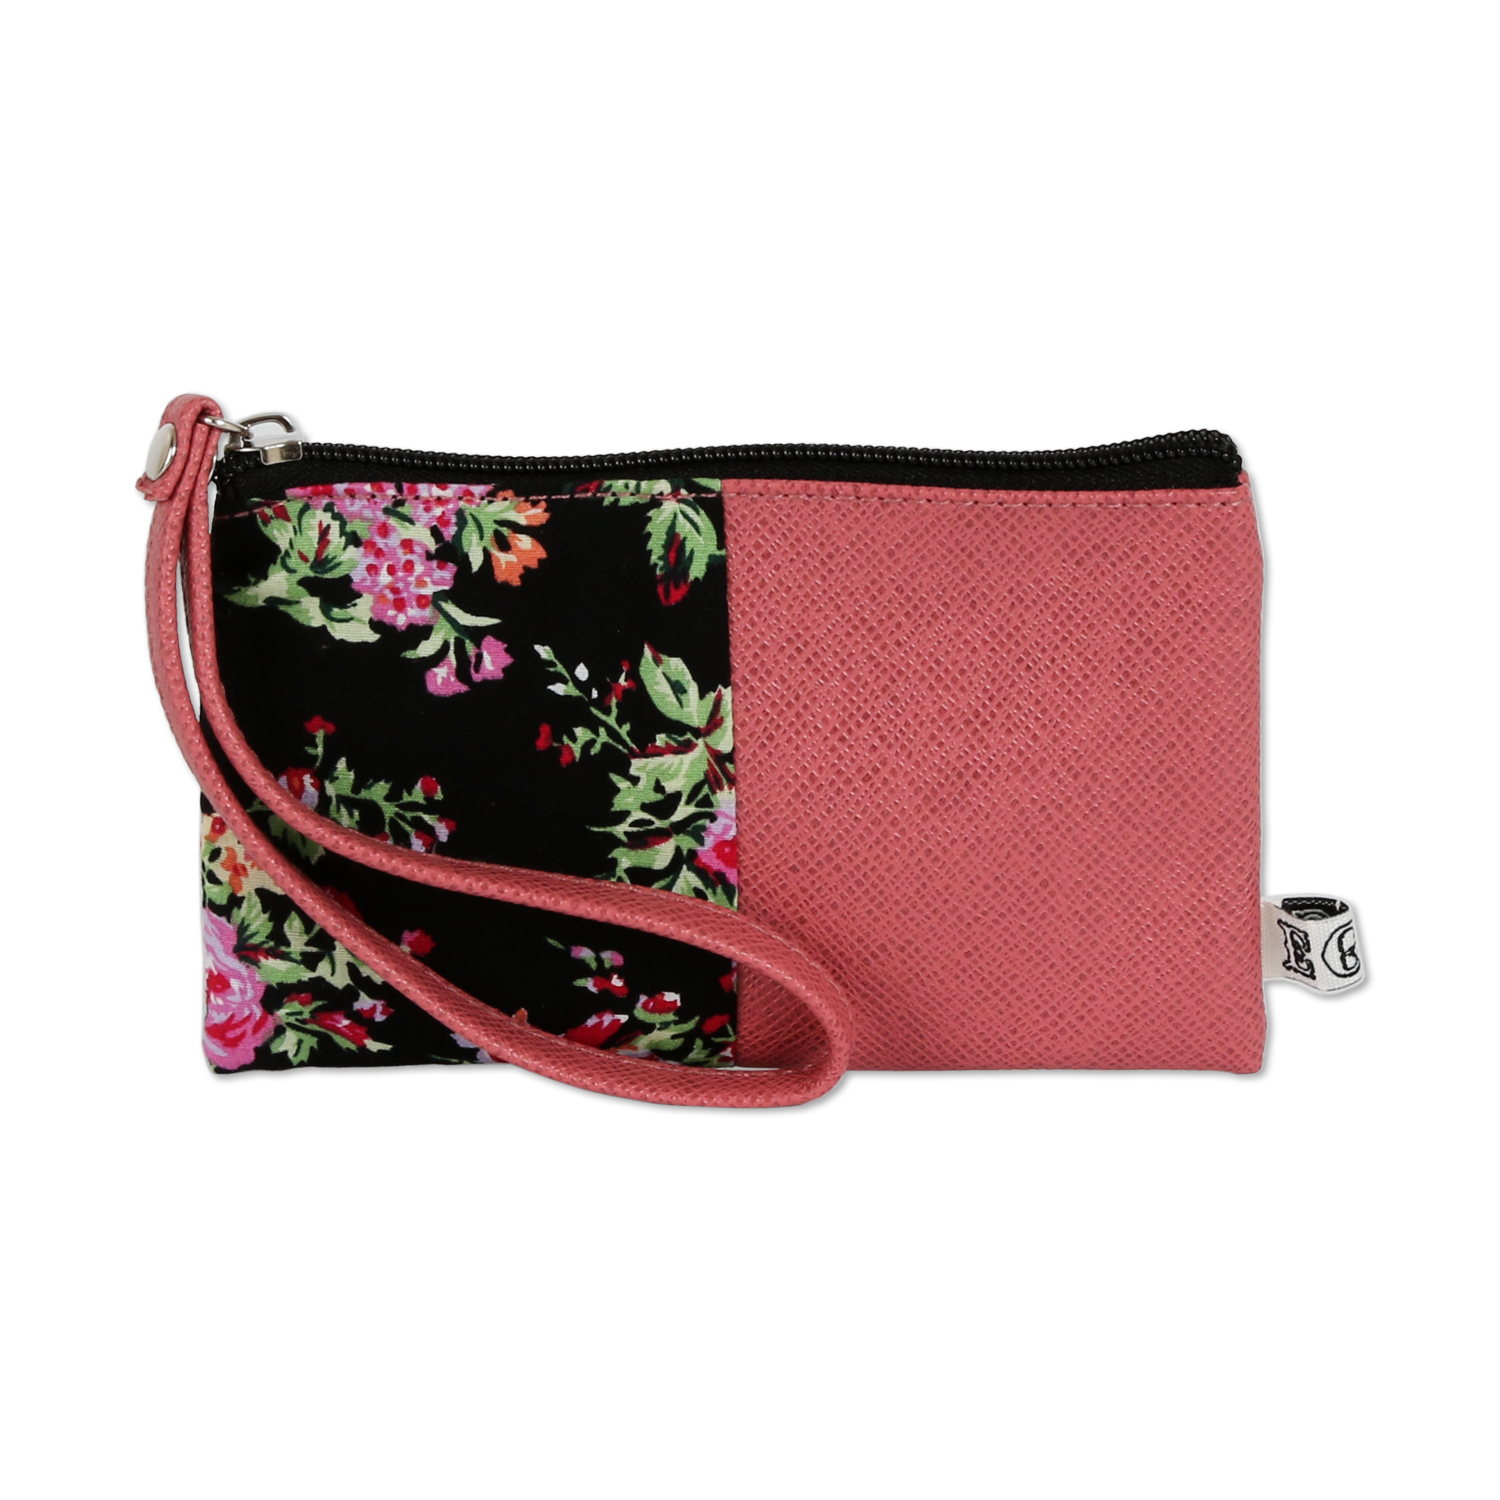 Daopwlkom Womens Multifunction Travel Phone Pouch Wristlet Bag Fashion Printing Zipper Sport Shoulder Bag Mini Wrist Purse